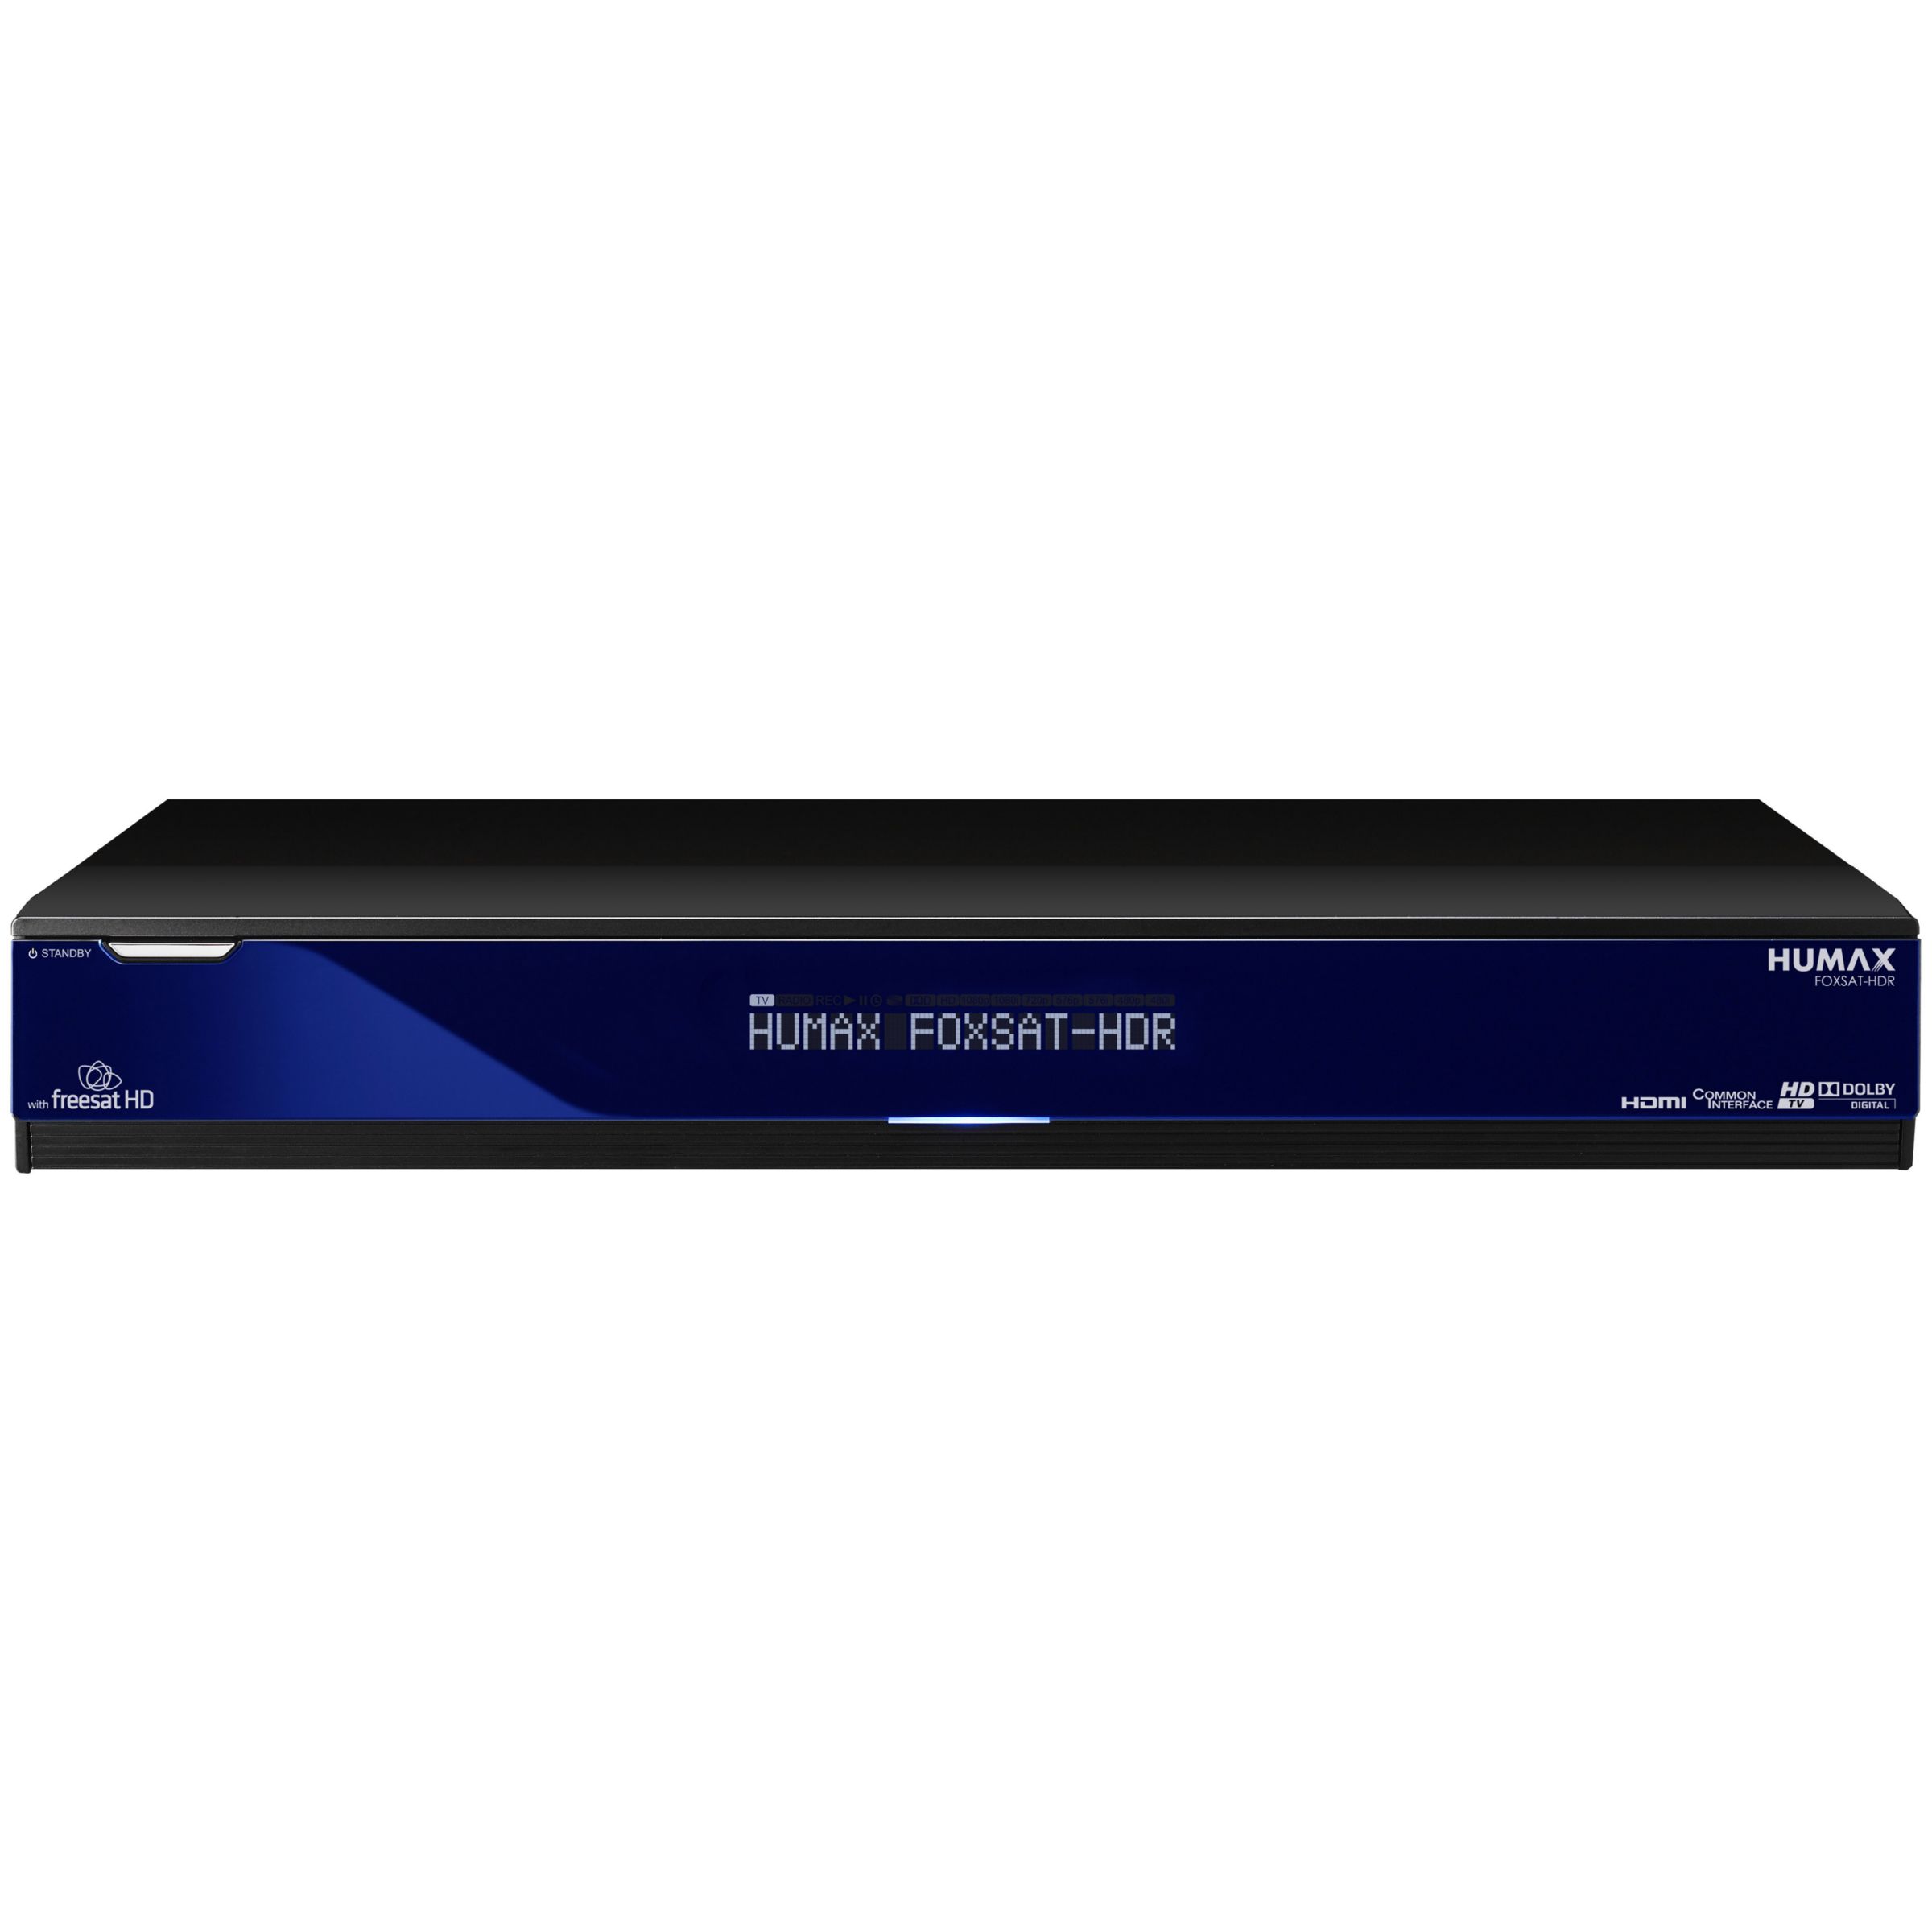 Humax FOXSAT-HDR 500GB freesat Digital TV Recorder at JohnLewis